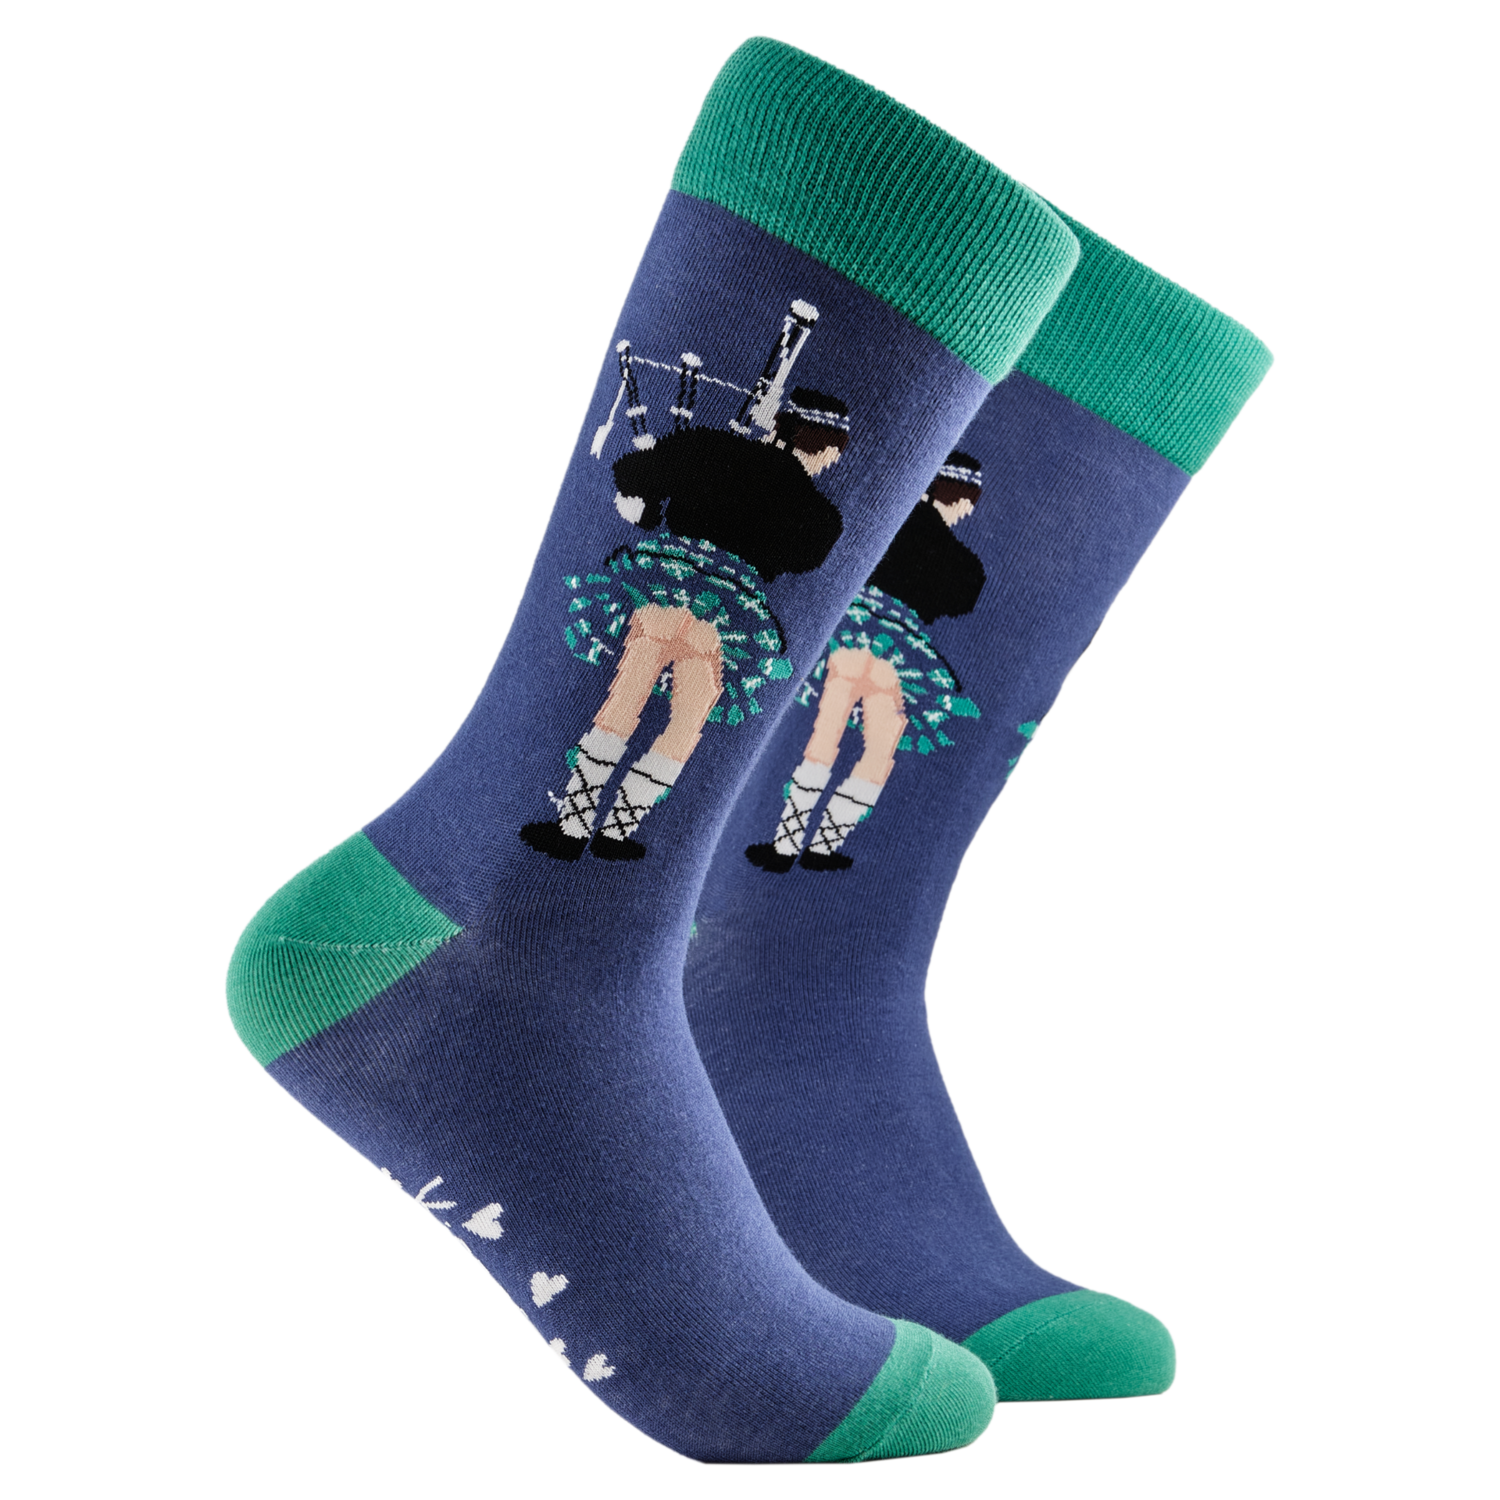 Soctopus Scottish Piper Kilt Bum Socks Soft Cotton Blend Uk Size 4 to 8 Gift From Scotland